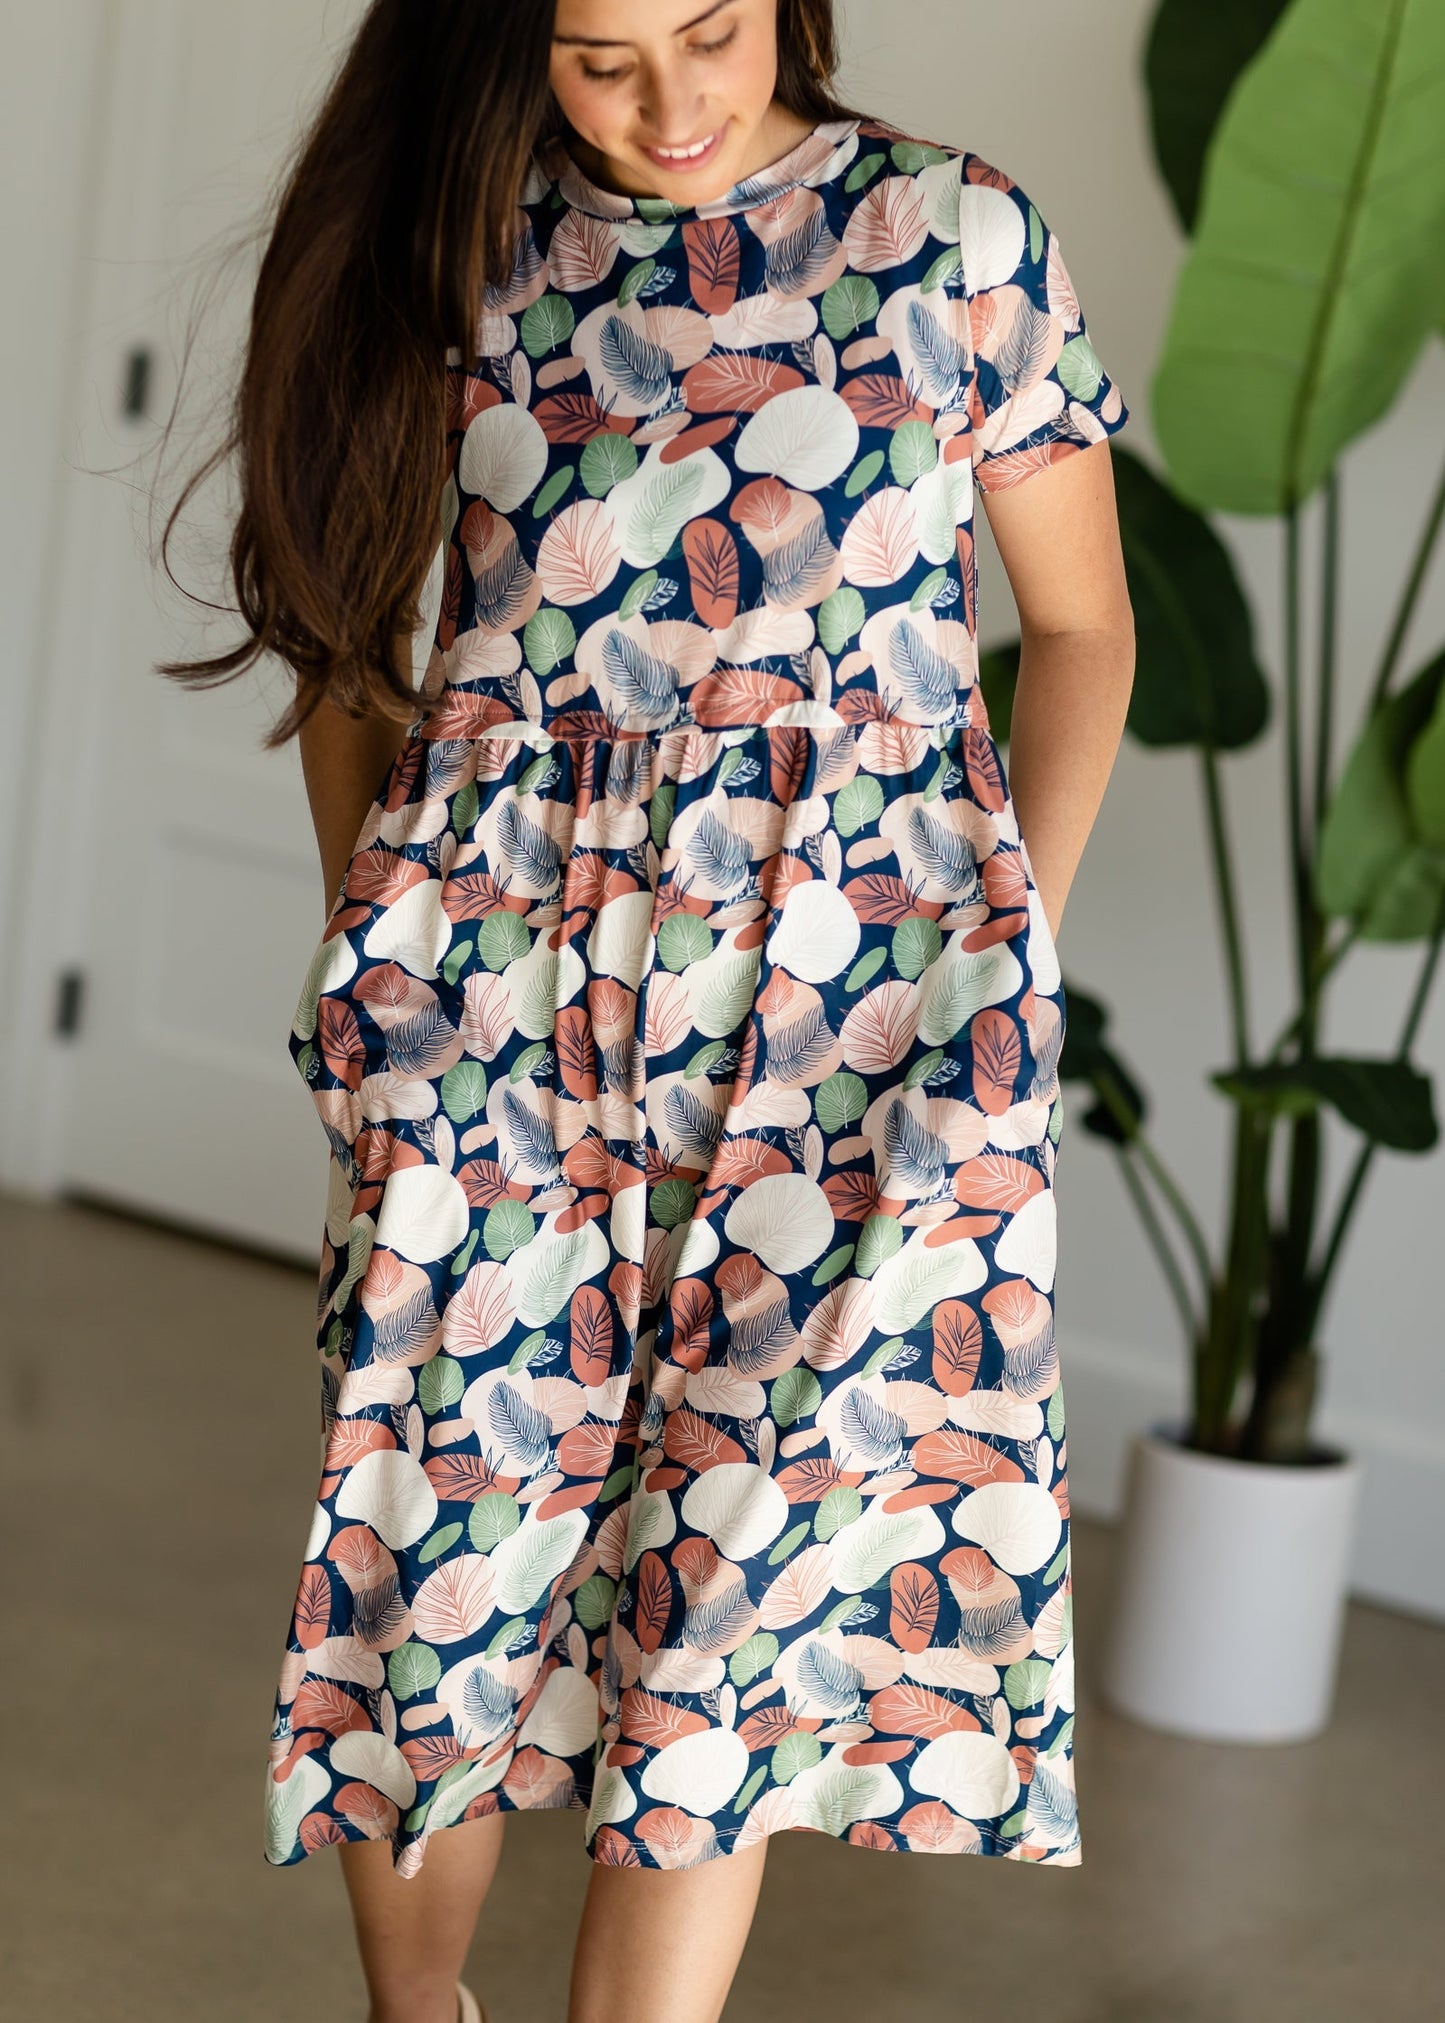 Aspen Leaf Print Midi Dress - FINAL SALE Dresses